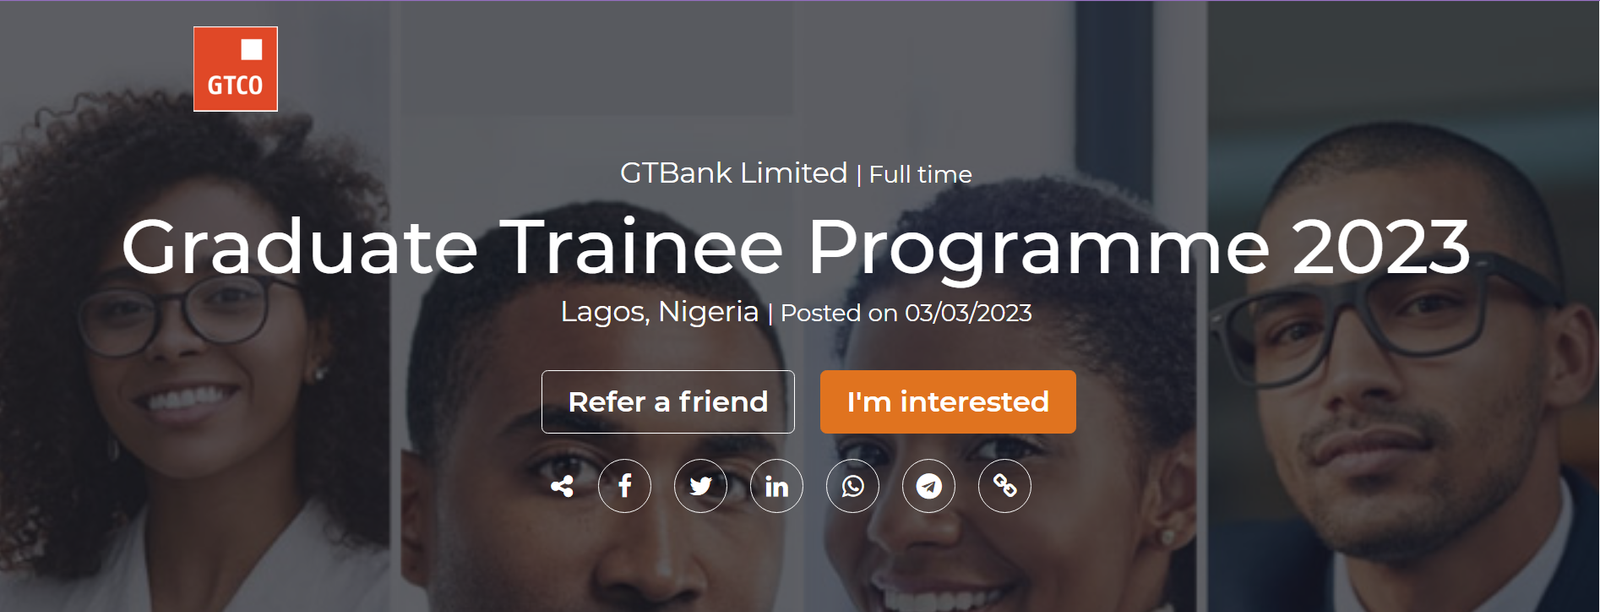 GTBank Graduate Trainee Programme